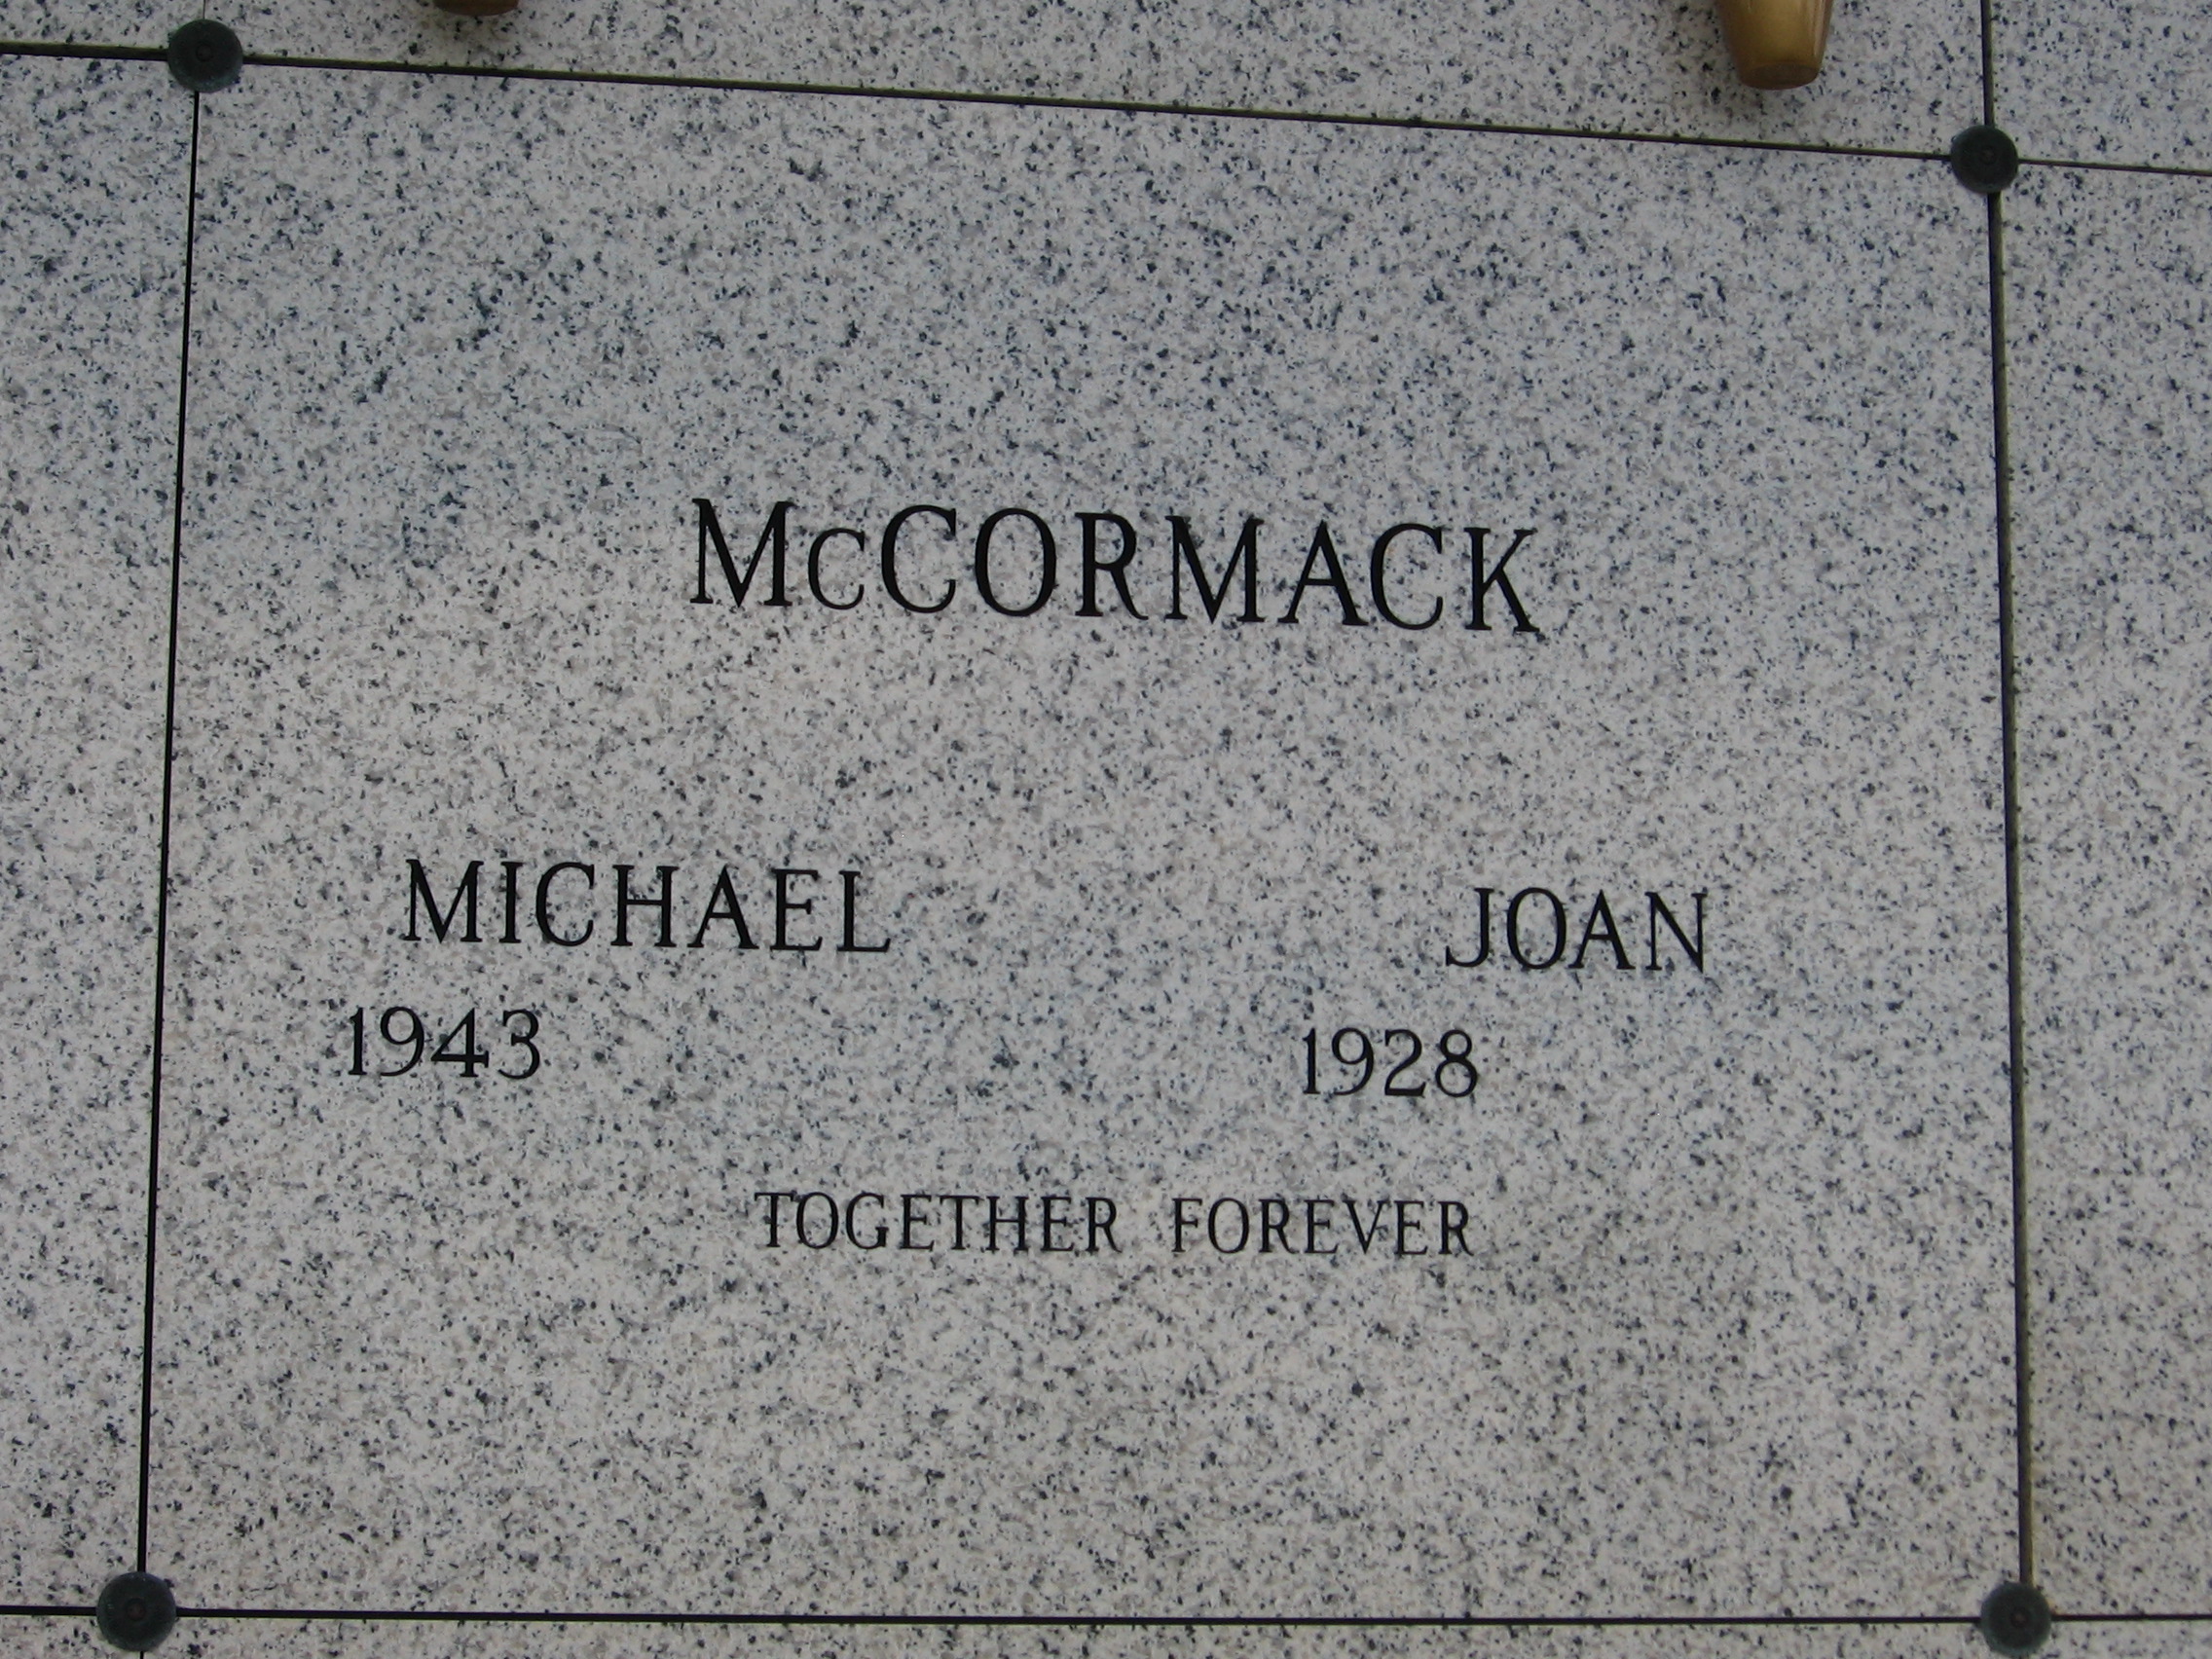 Michael McCormack